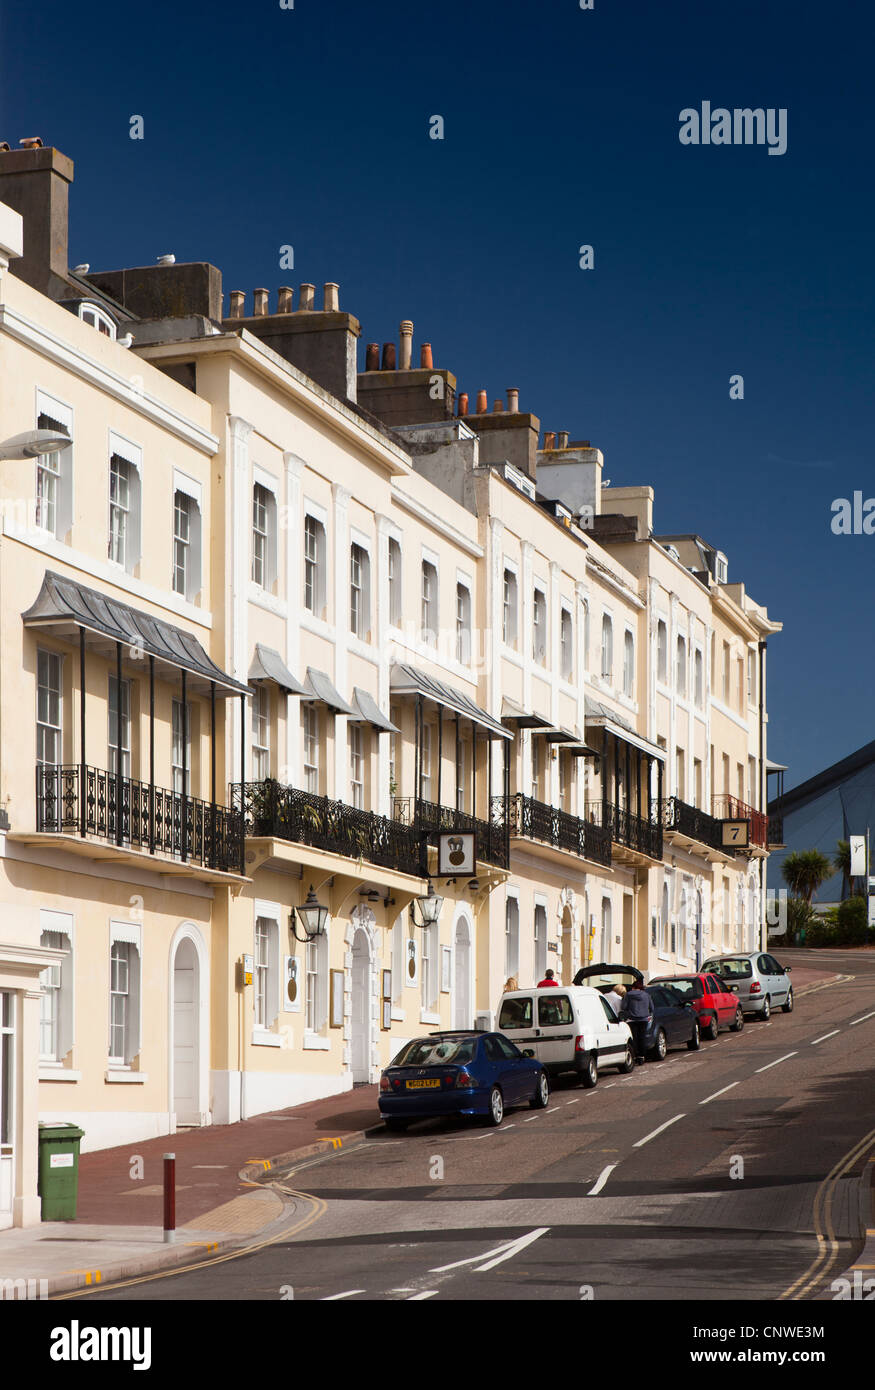 UK, England, Devon, Torquay, Victoria Parade, elegant tall seafront houses Stock Photo